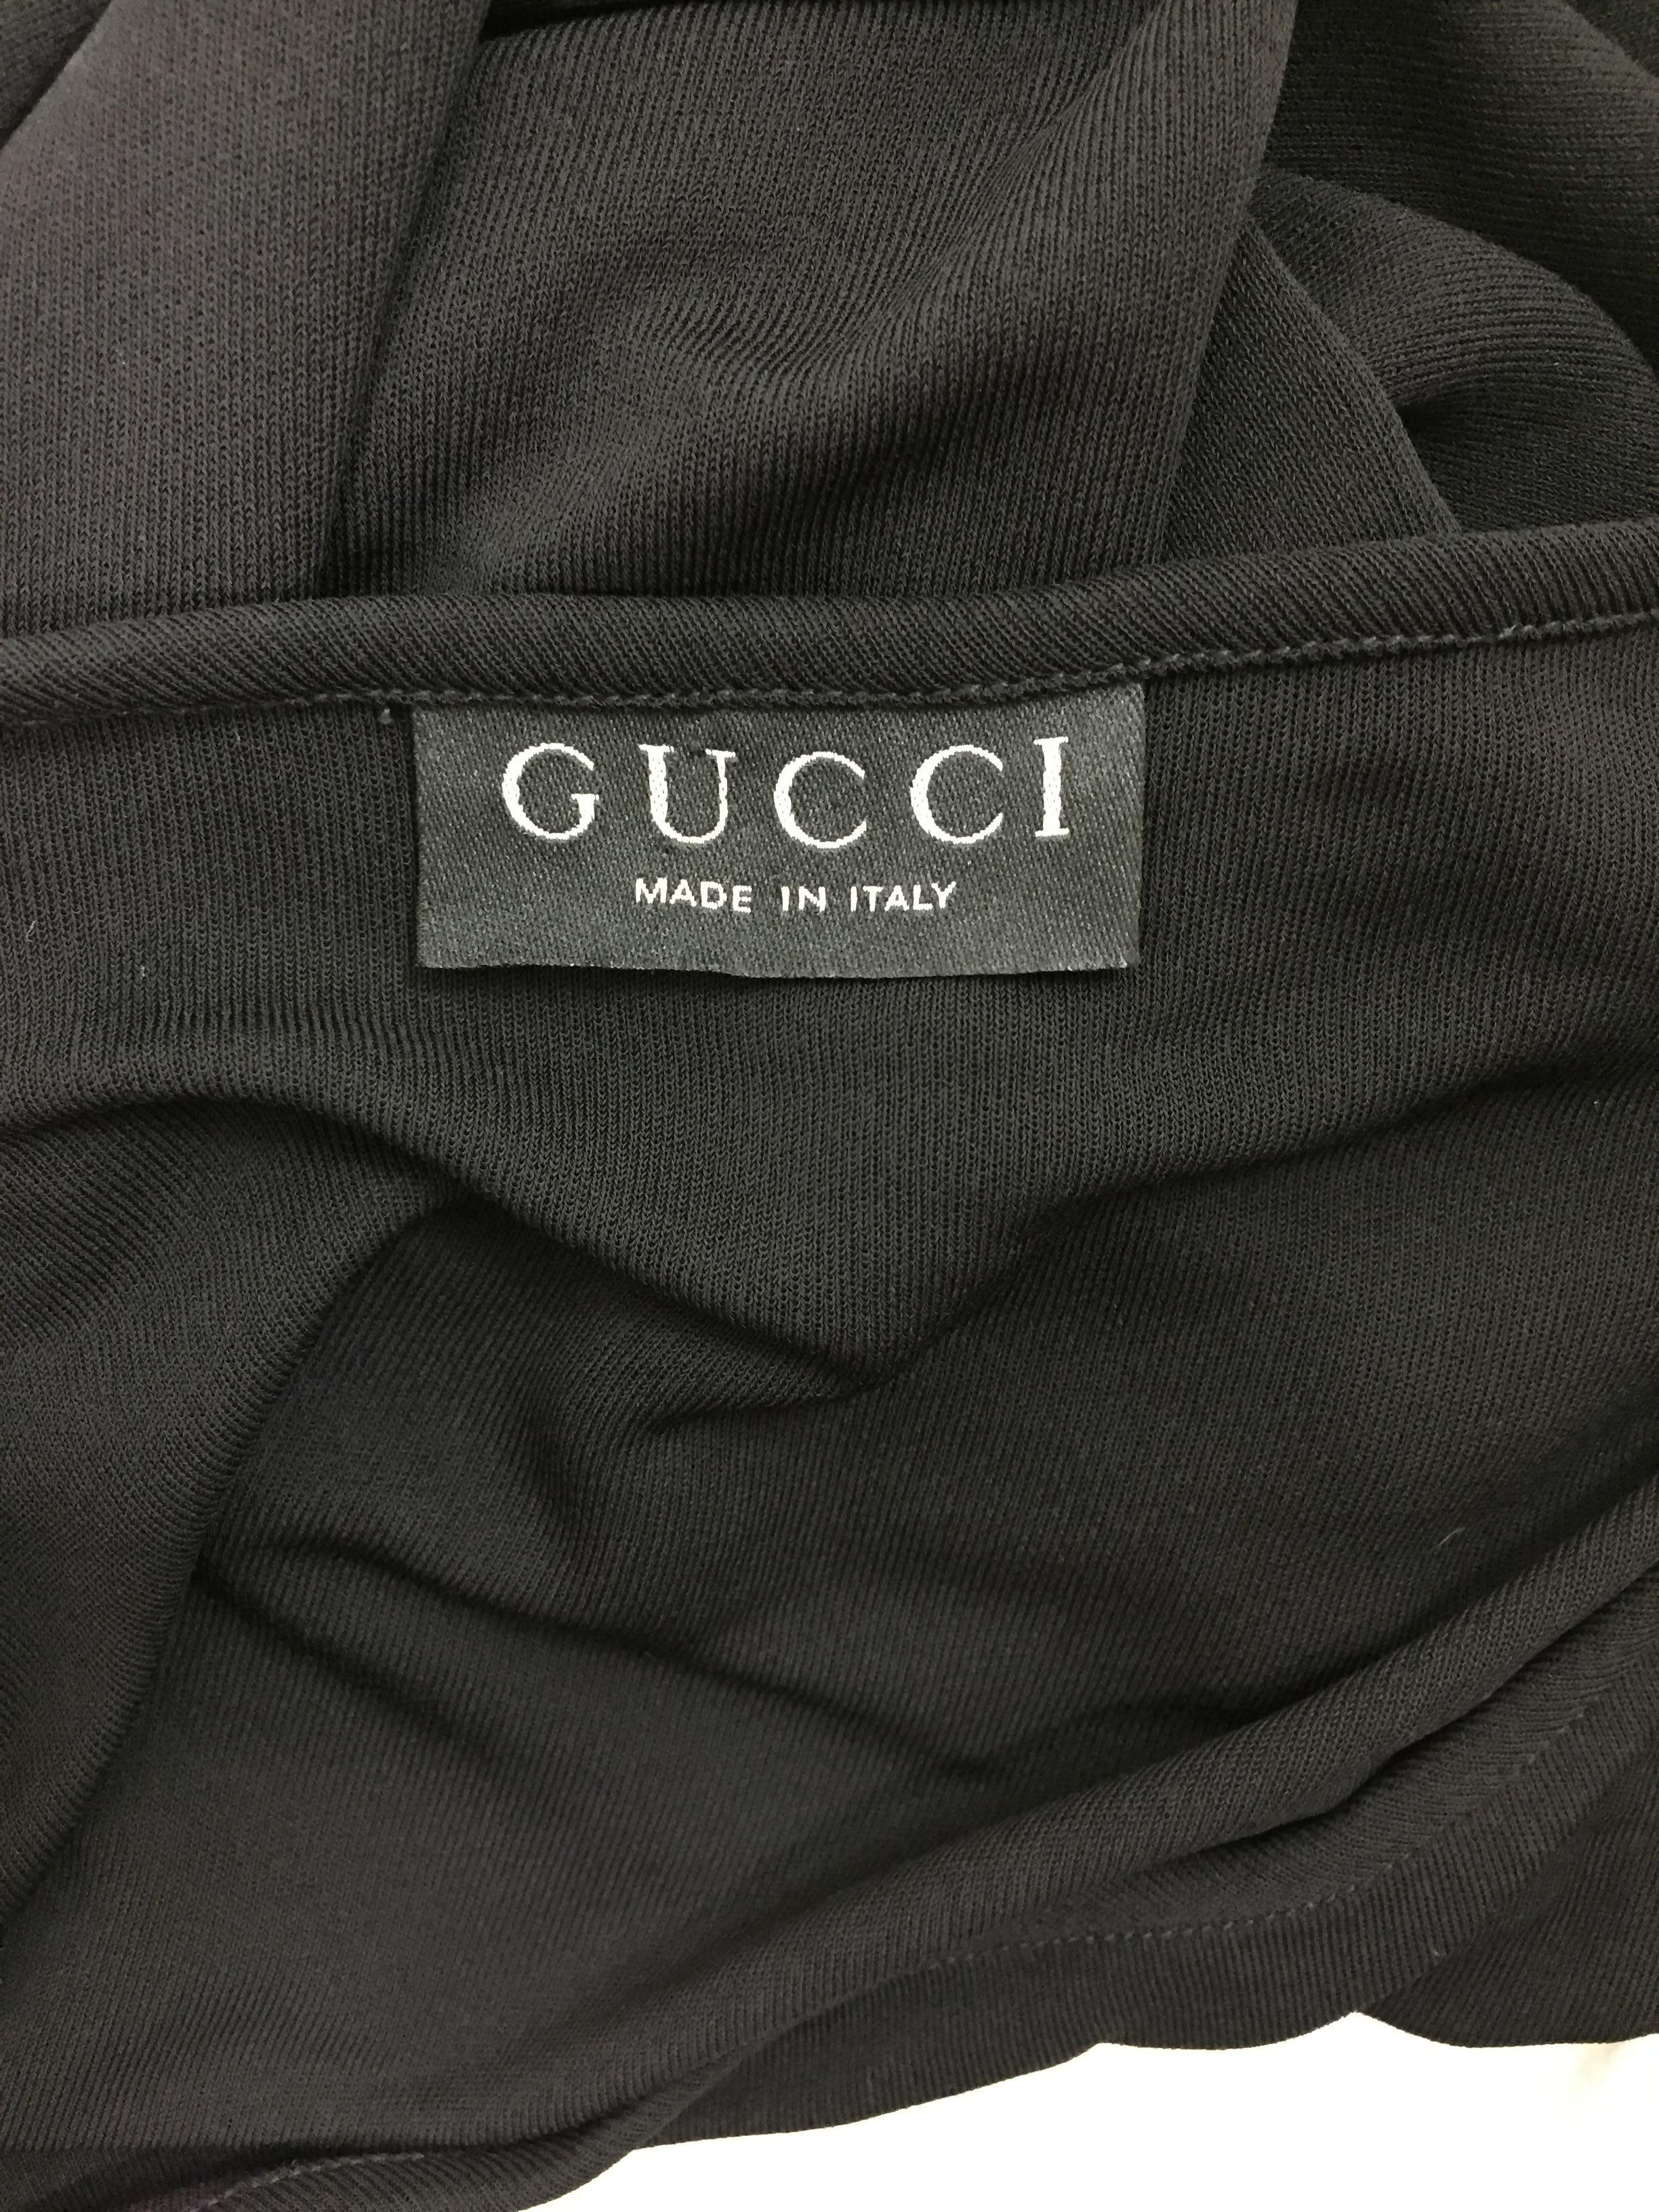 1997 Gucci Tom Ford Black Bateau Wide Neck Slinky Midi Dress In Good Condition In Yukon, OK